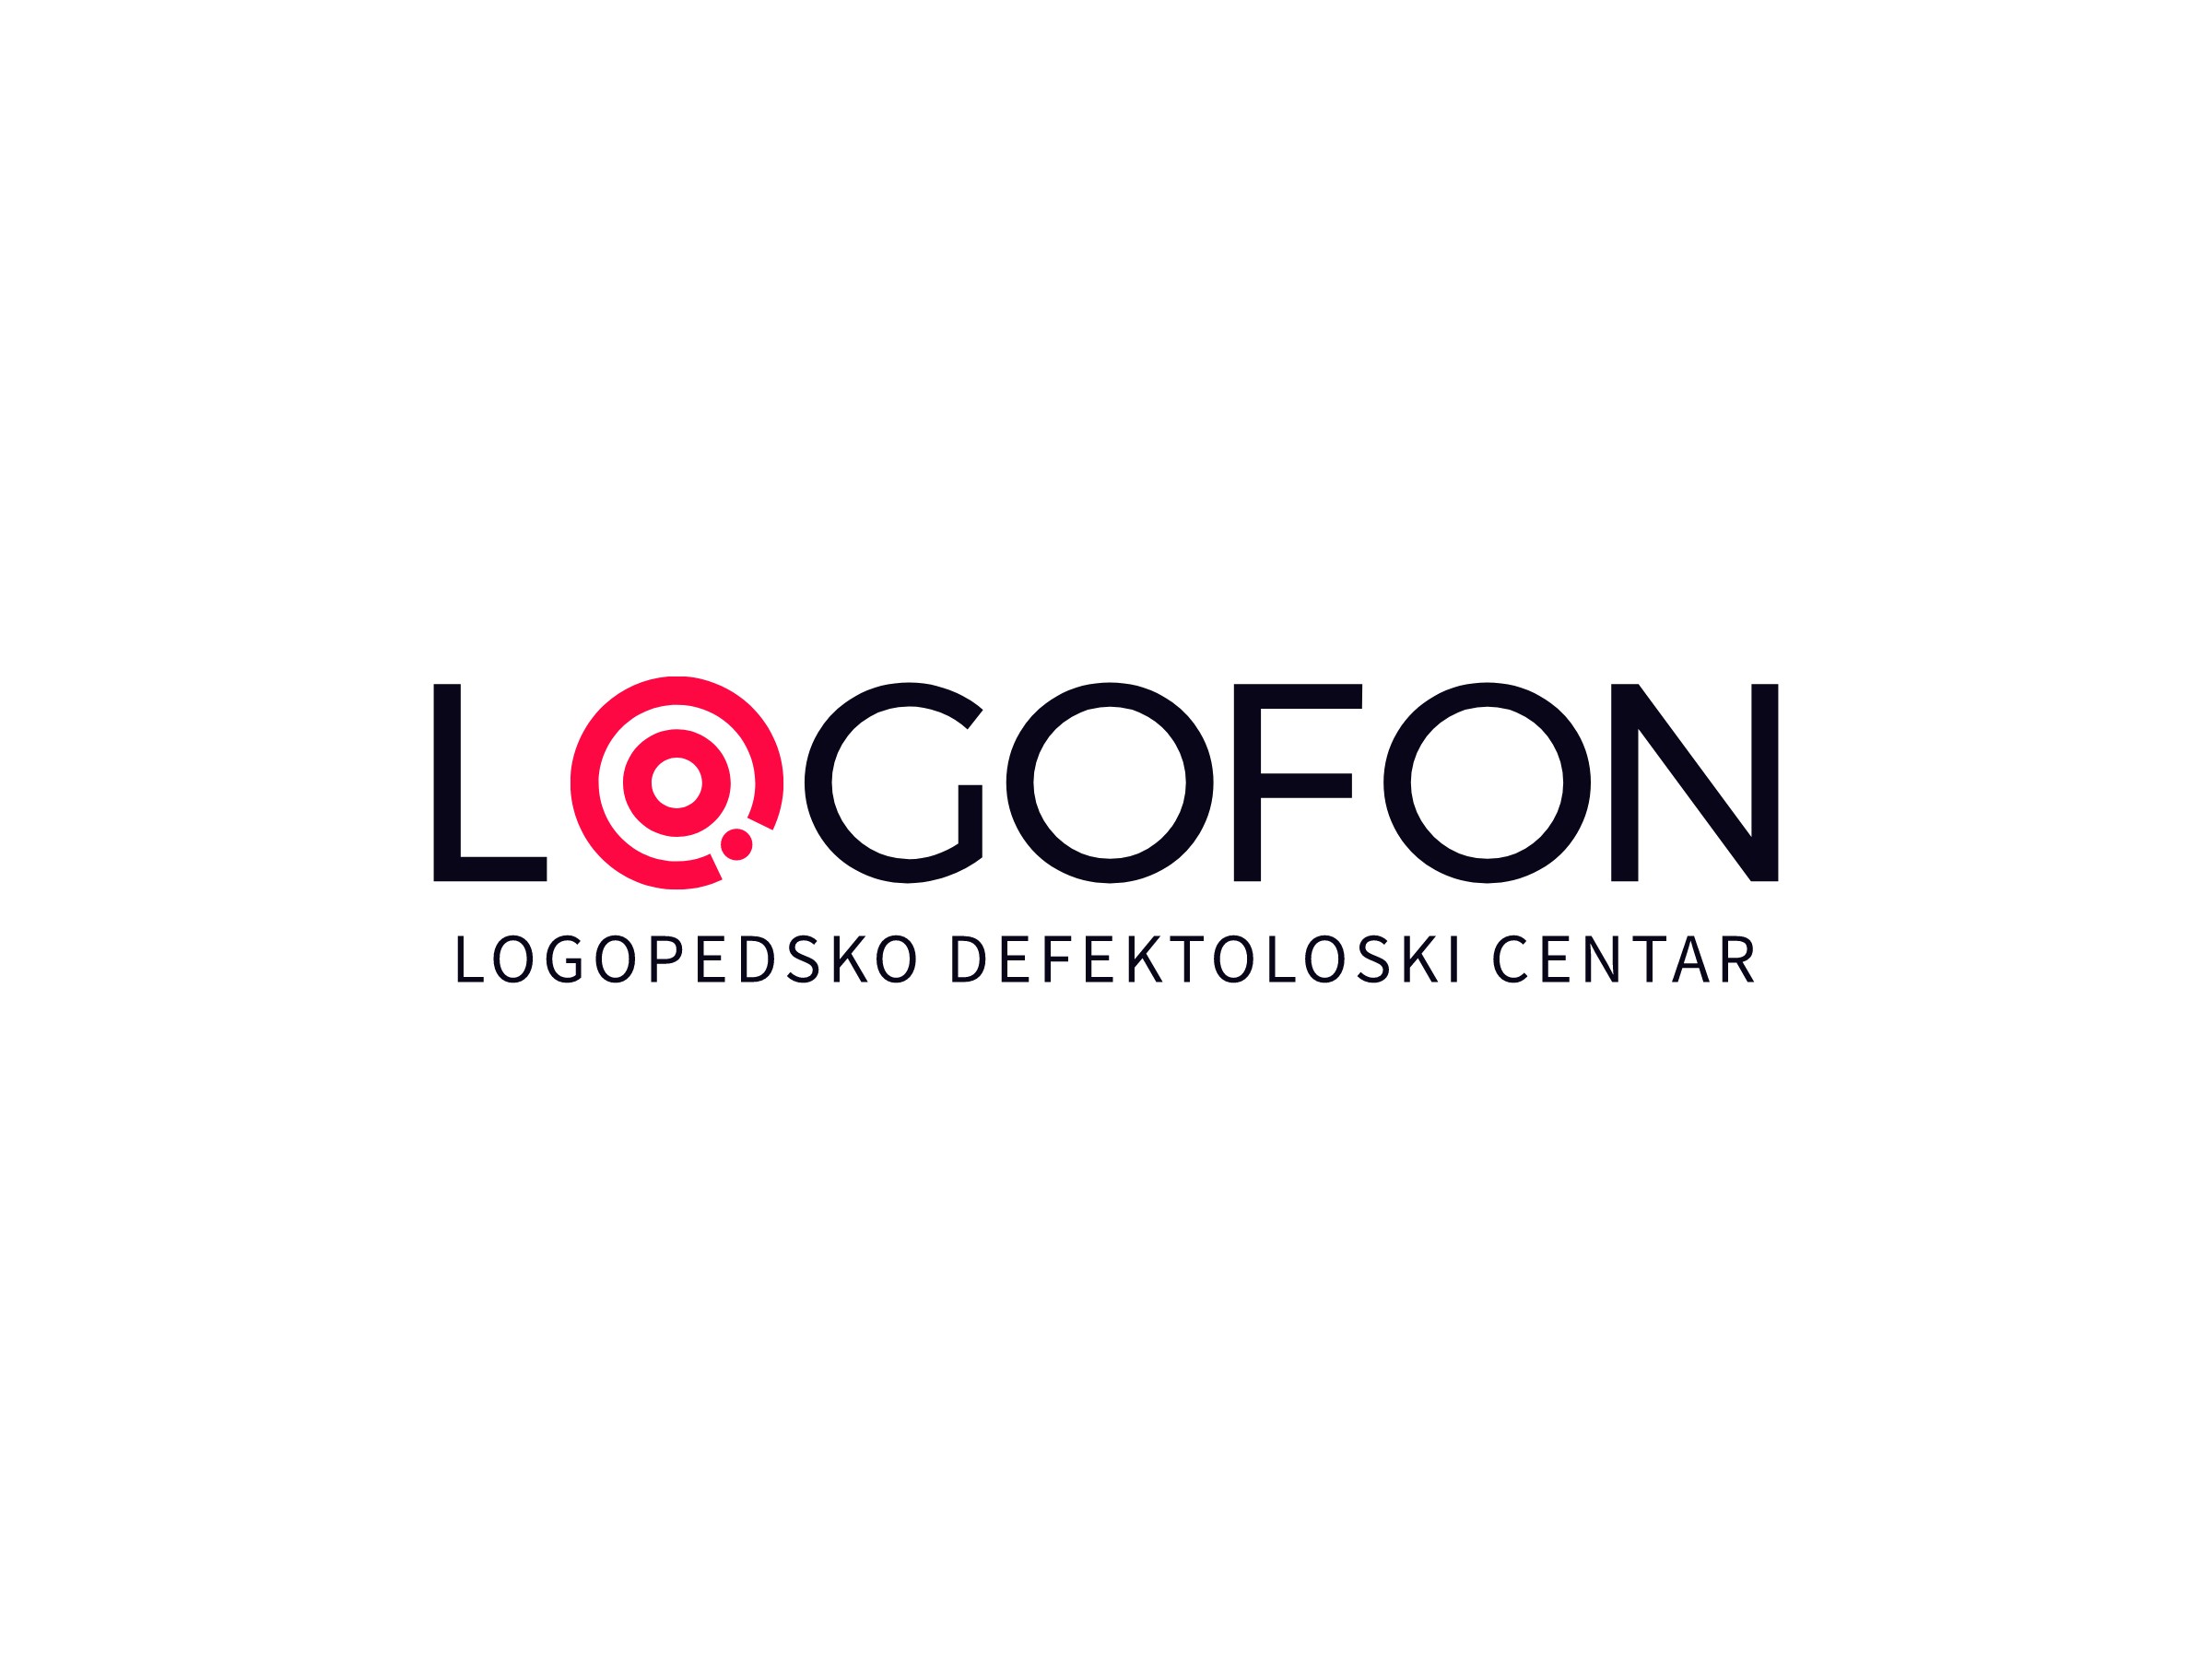 LOGOFON - logopedsko defektoloski centar